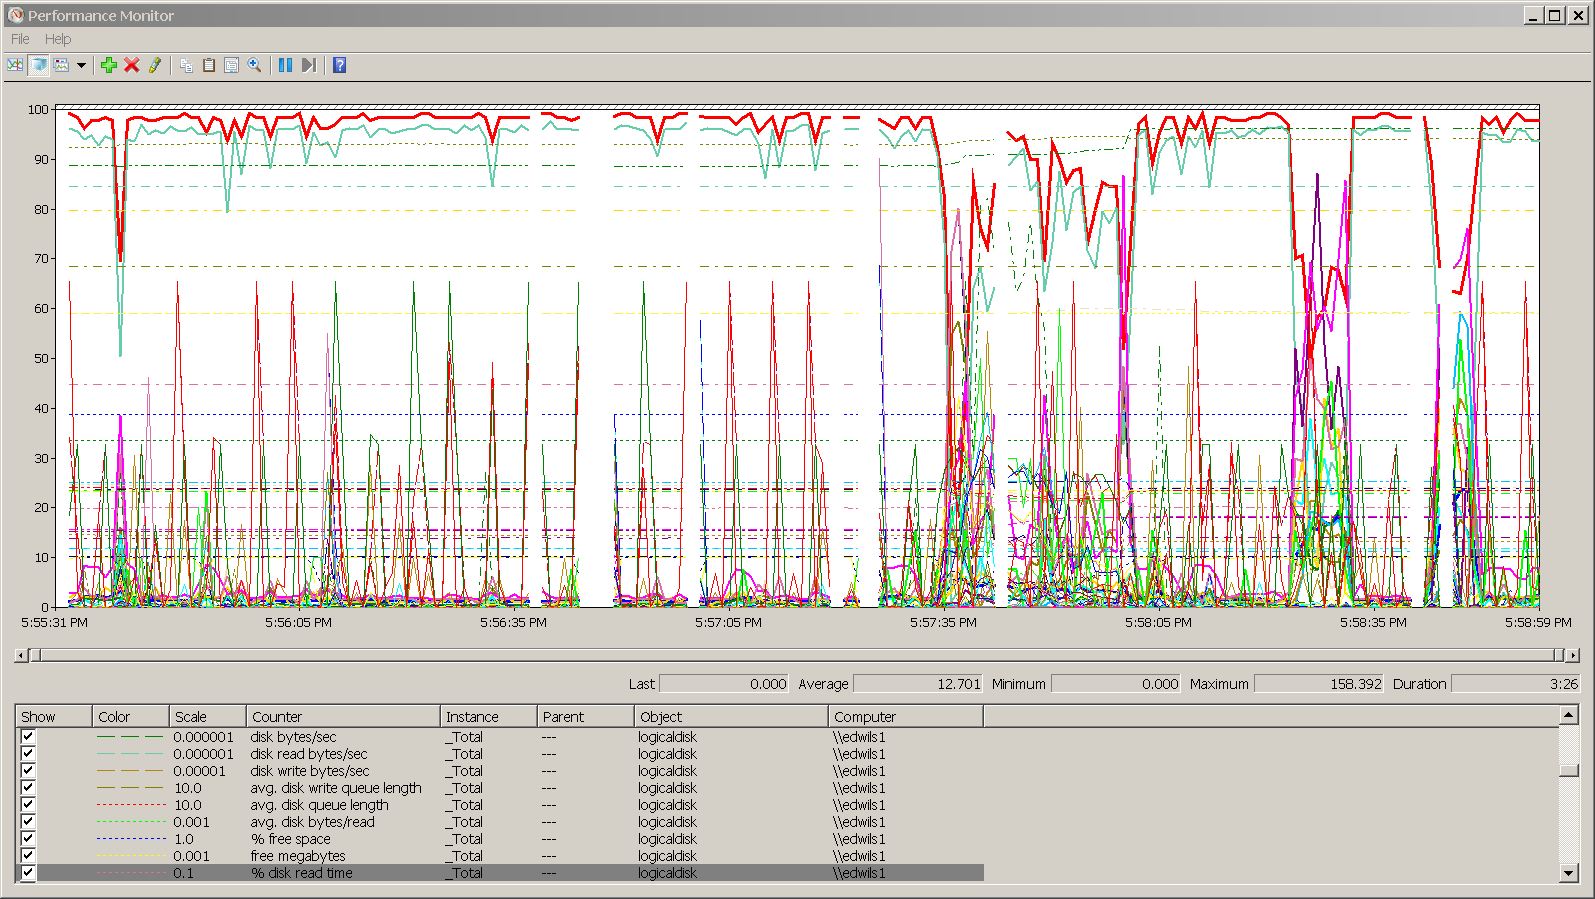 Performance monitor graph